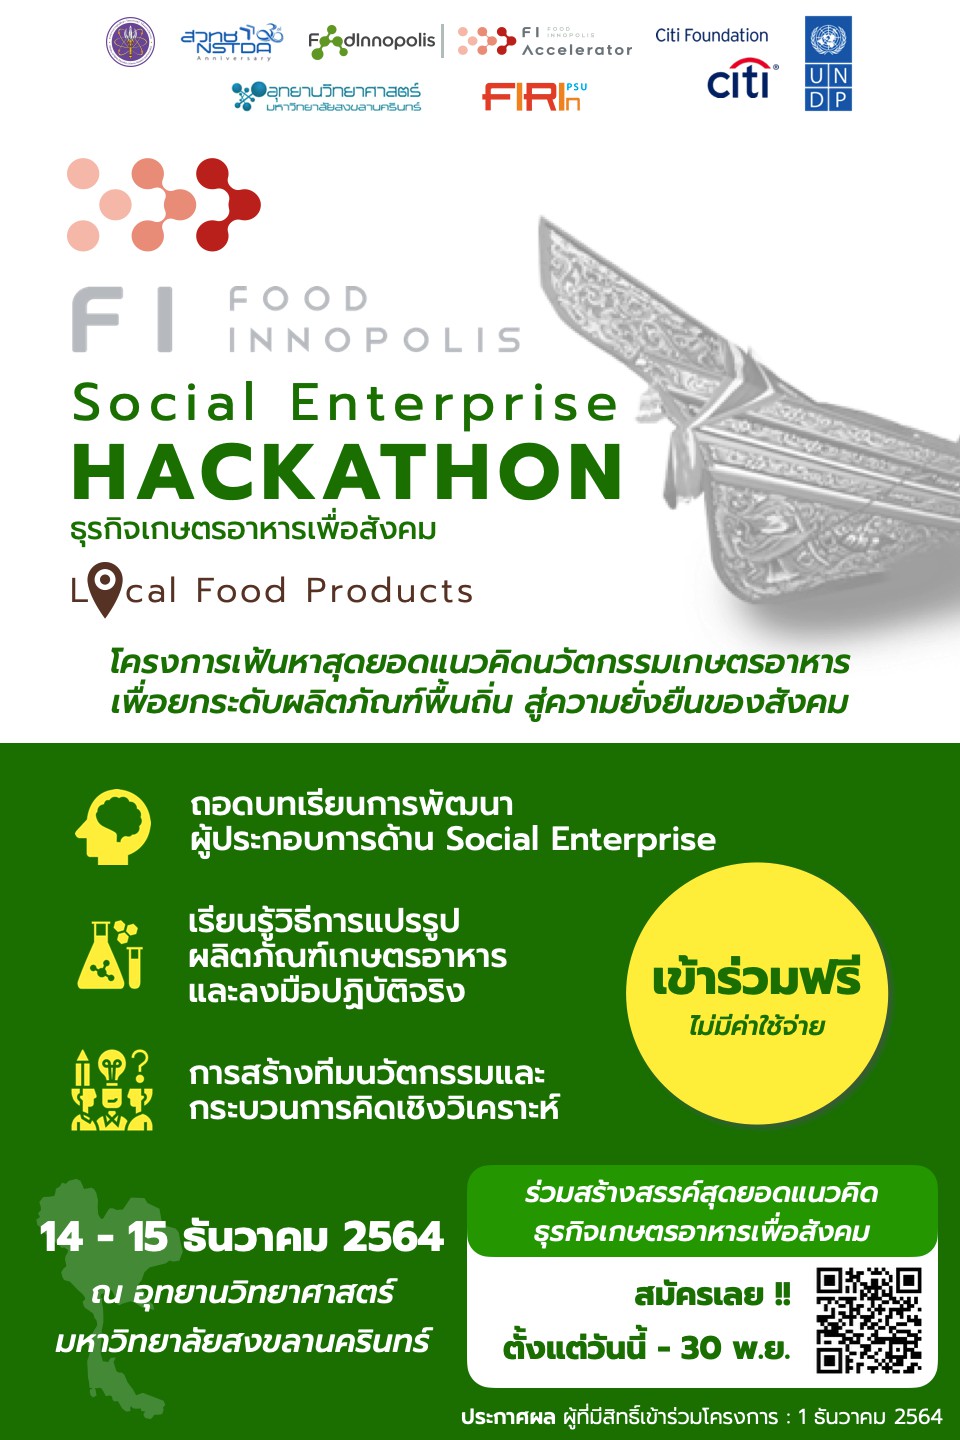 Food Innopolis Social Enterprise Hackathon - ธุรกิจเกษตรอาหารเพื่อสังคม เปิดรับสมัครผู้ประกอบการและผู้ที่สนใจในธุรกิจเกษตรอาหาร ในรูปแบบ Social Enterprise